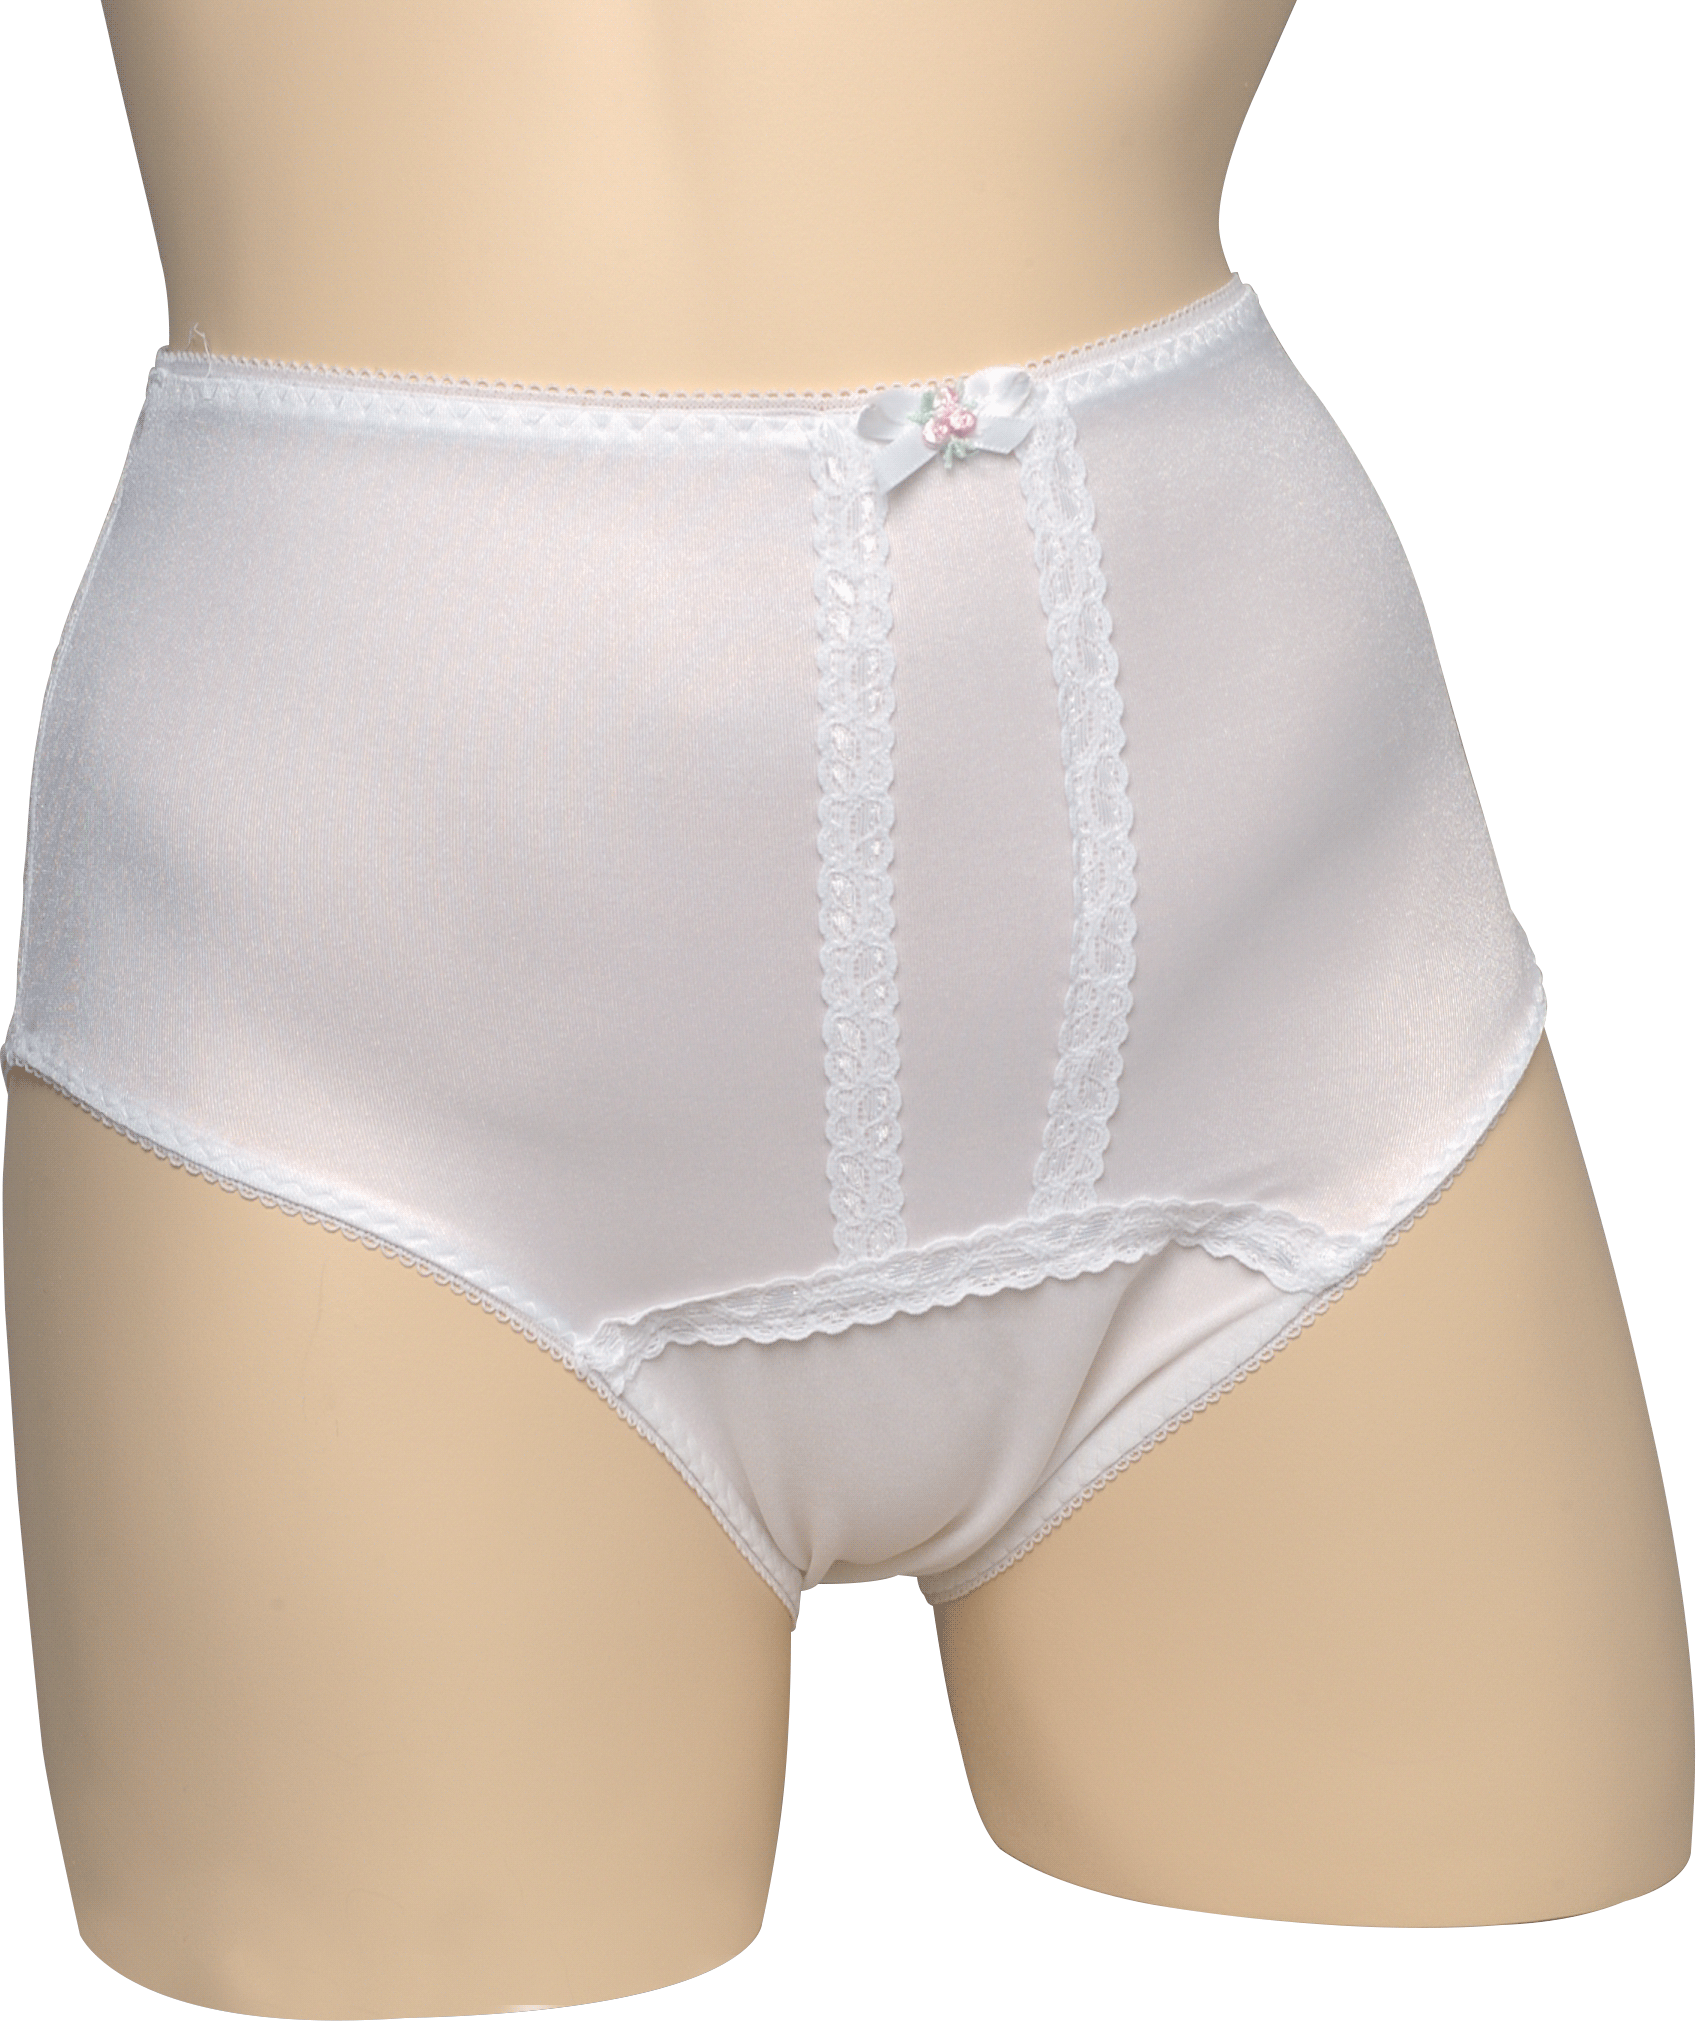 EA/1 - Salk Premier Plus&trade; Ladies Panty Large, 38" to 44" Waist Size, Nylon/Lycra Stretch Fabric - Best Buy Medical Supplies